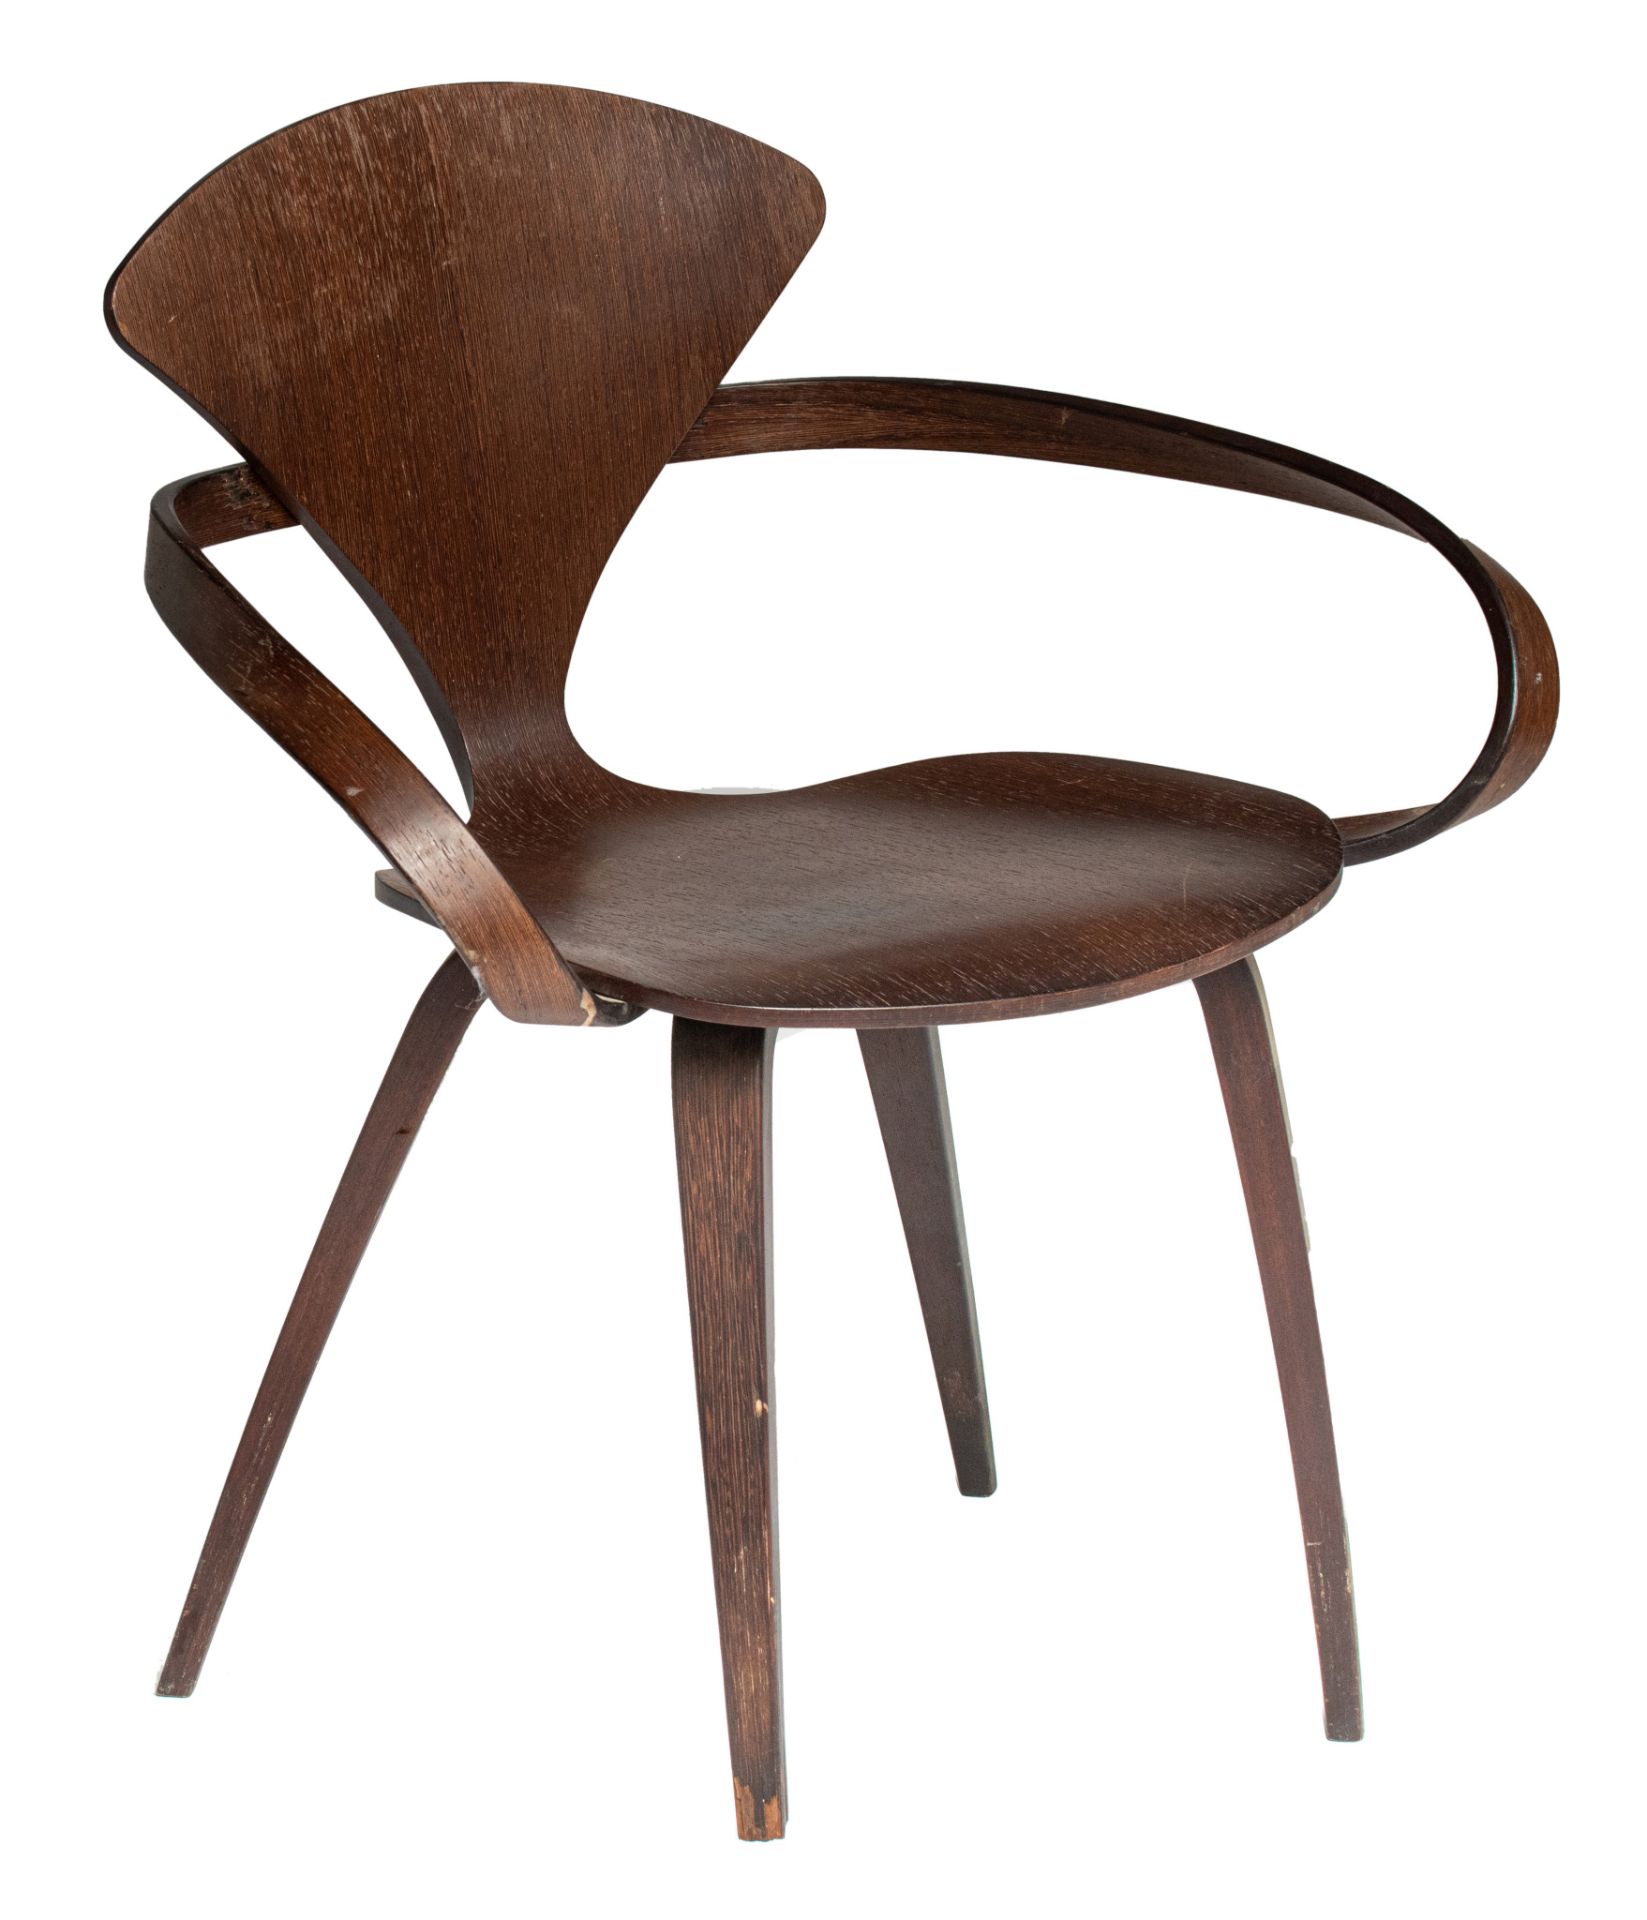 A vintage rosewood Pretzel chair by George Nelson, H 79,5 - W 67 cm